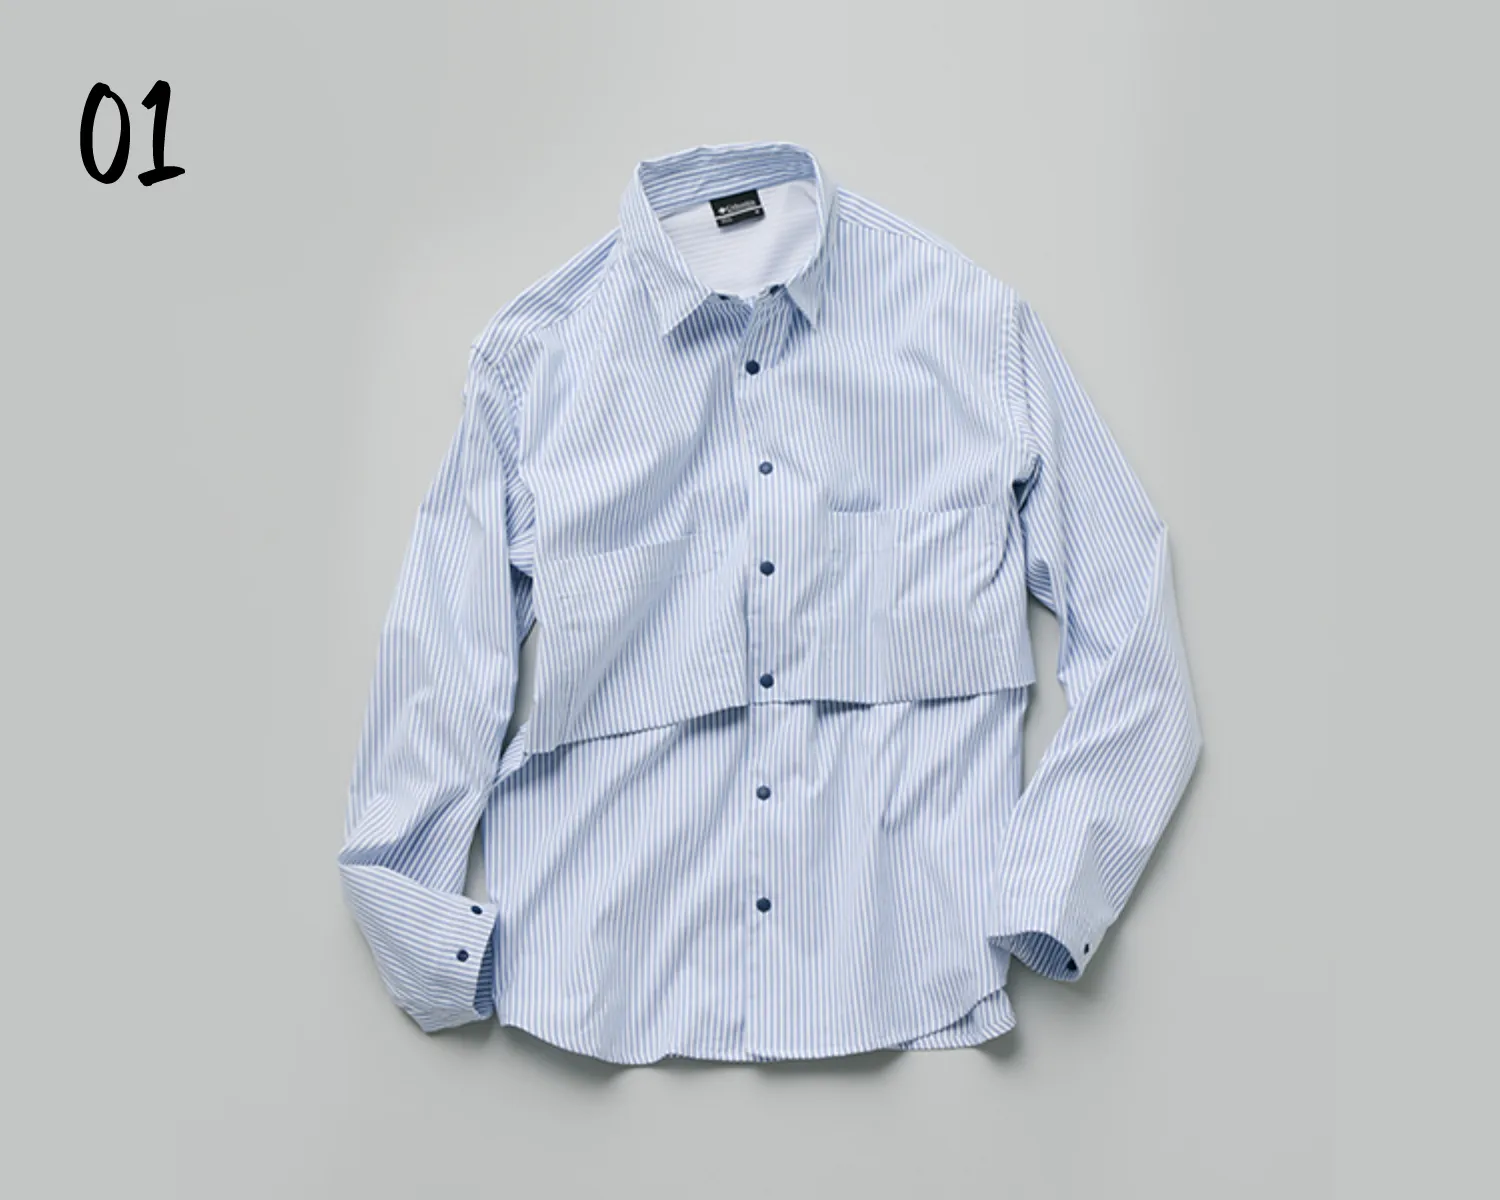 PM3868 Long Sleeve shirt